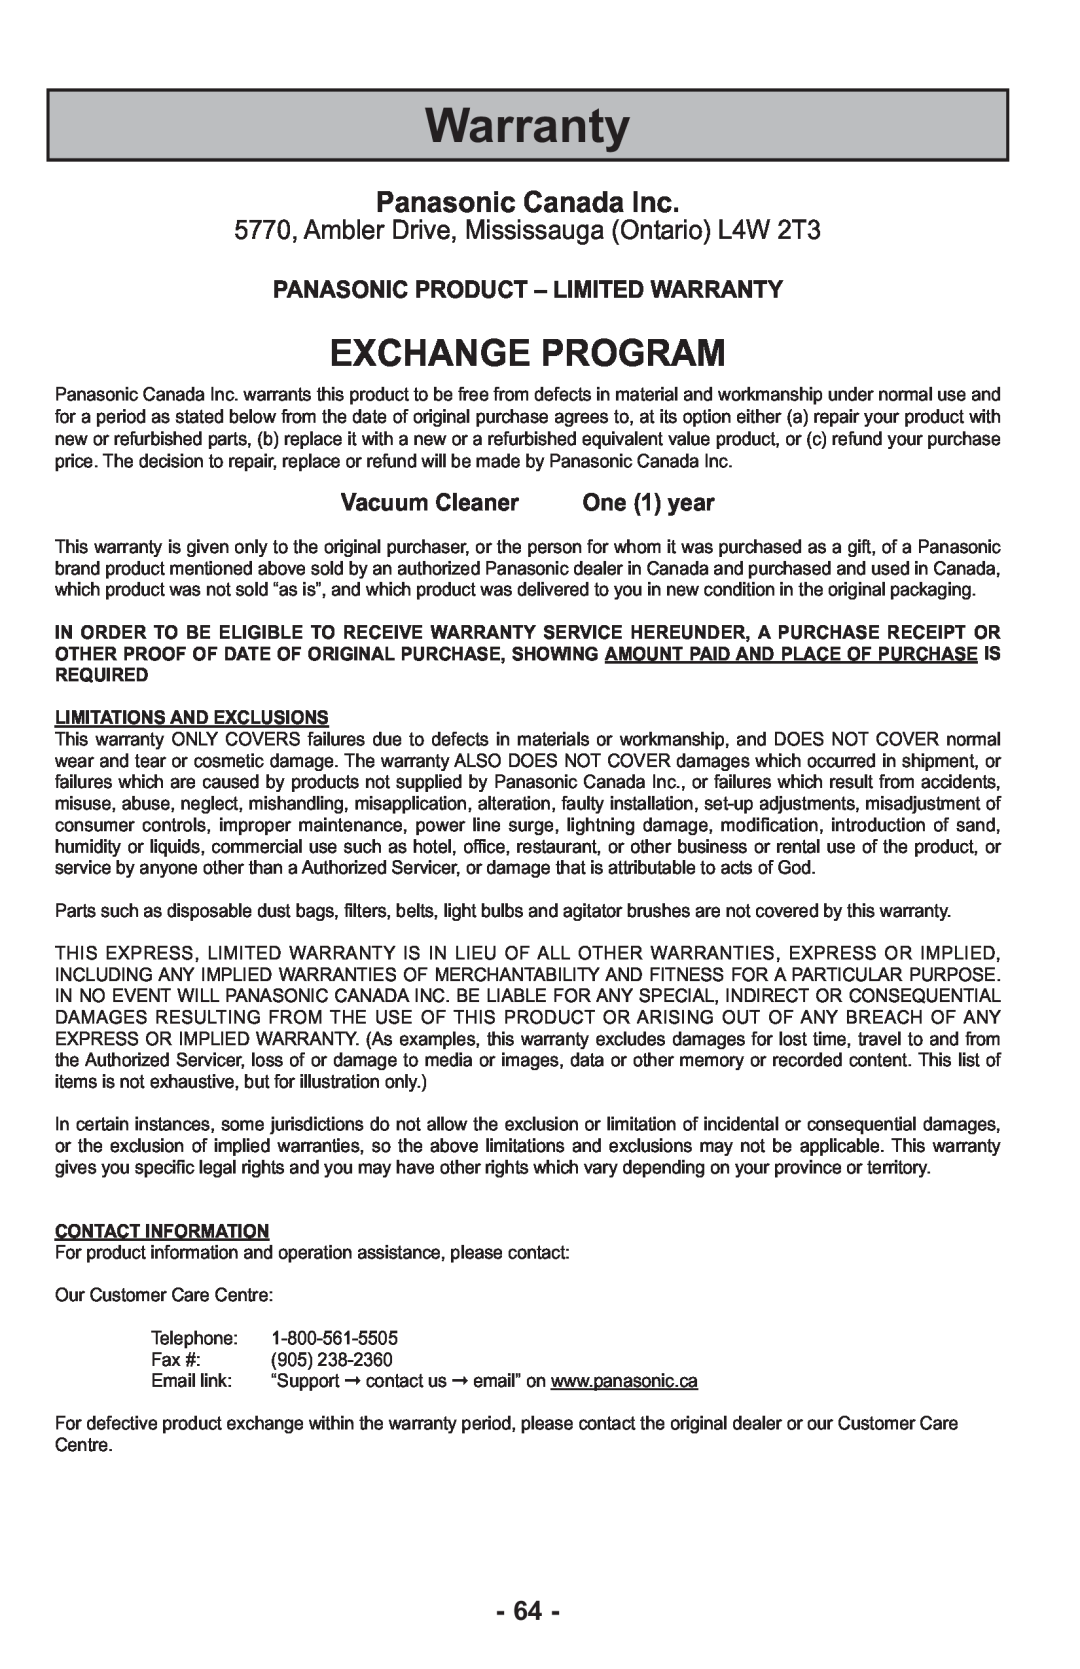 Panasonic MCUL815 Exchange Program, Panasonic Canada Inc, 5770, Ambler Drive, Mississauga Ontario L4W 2T3, Warranty 